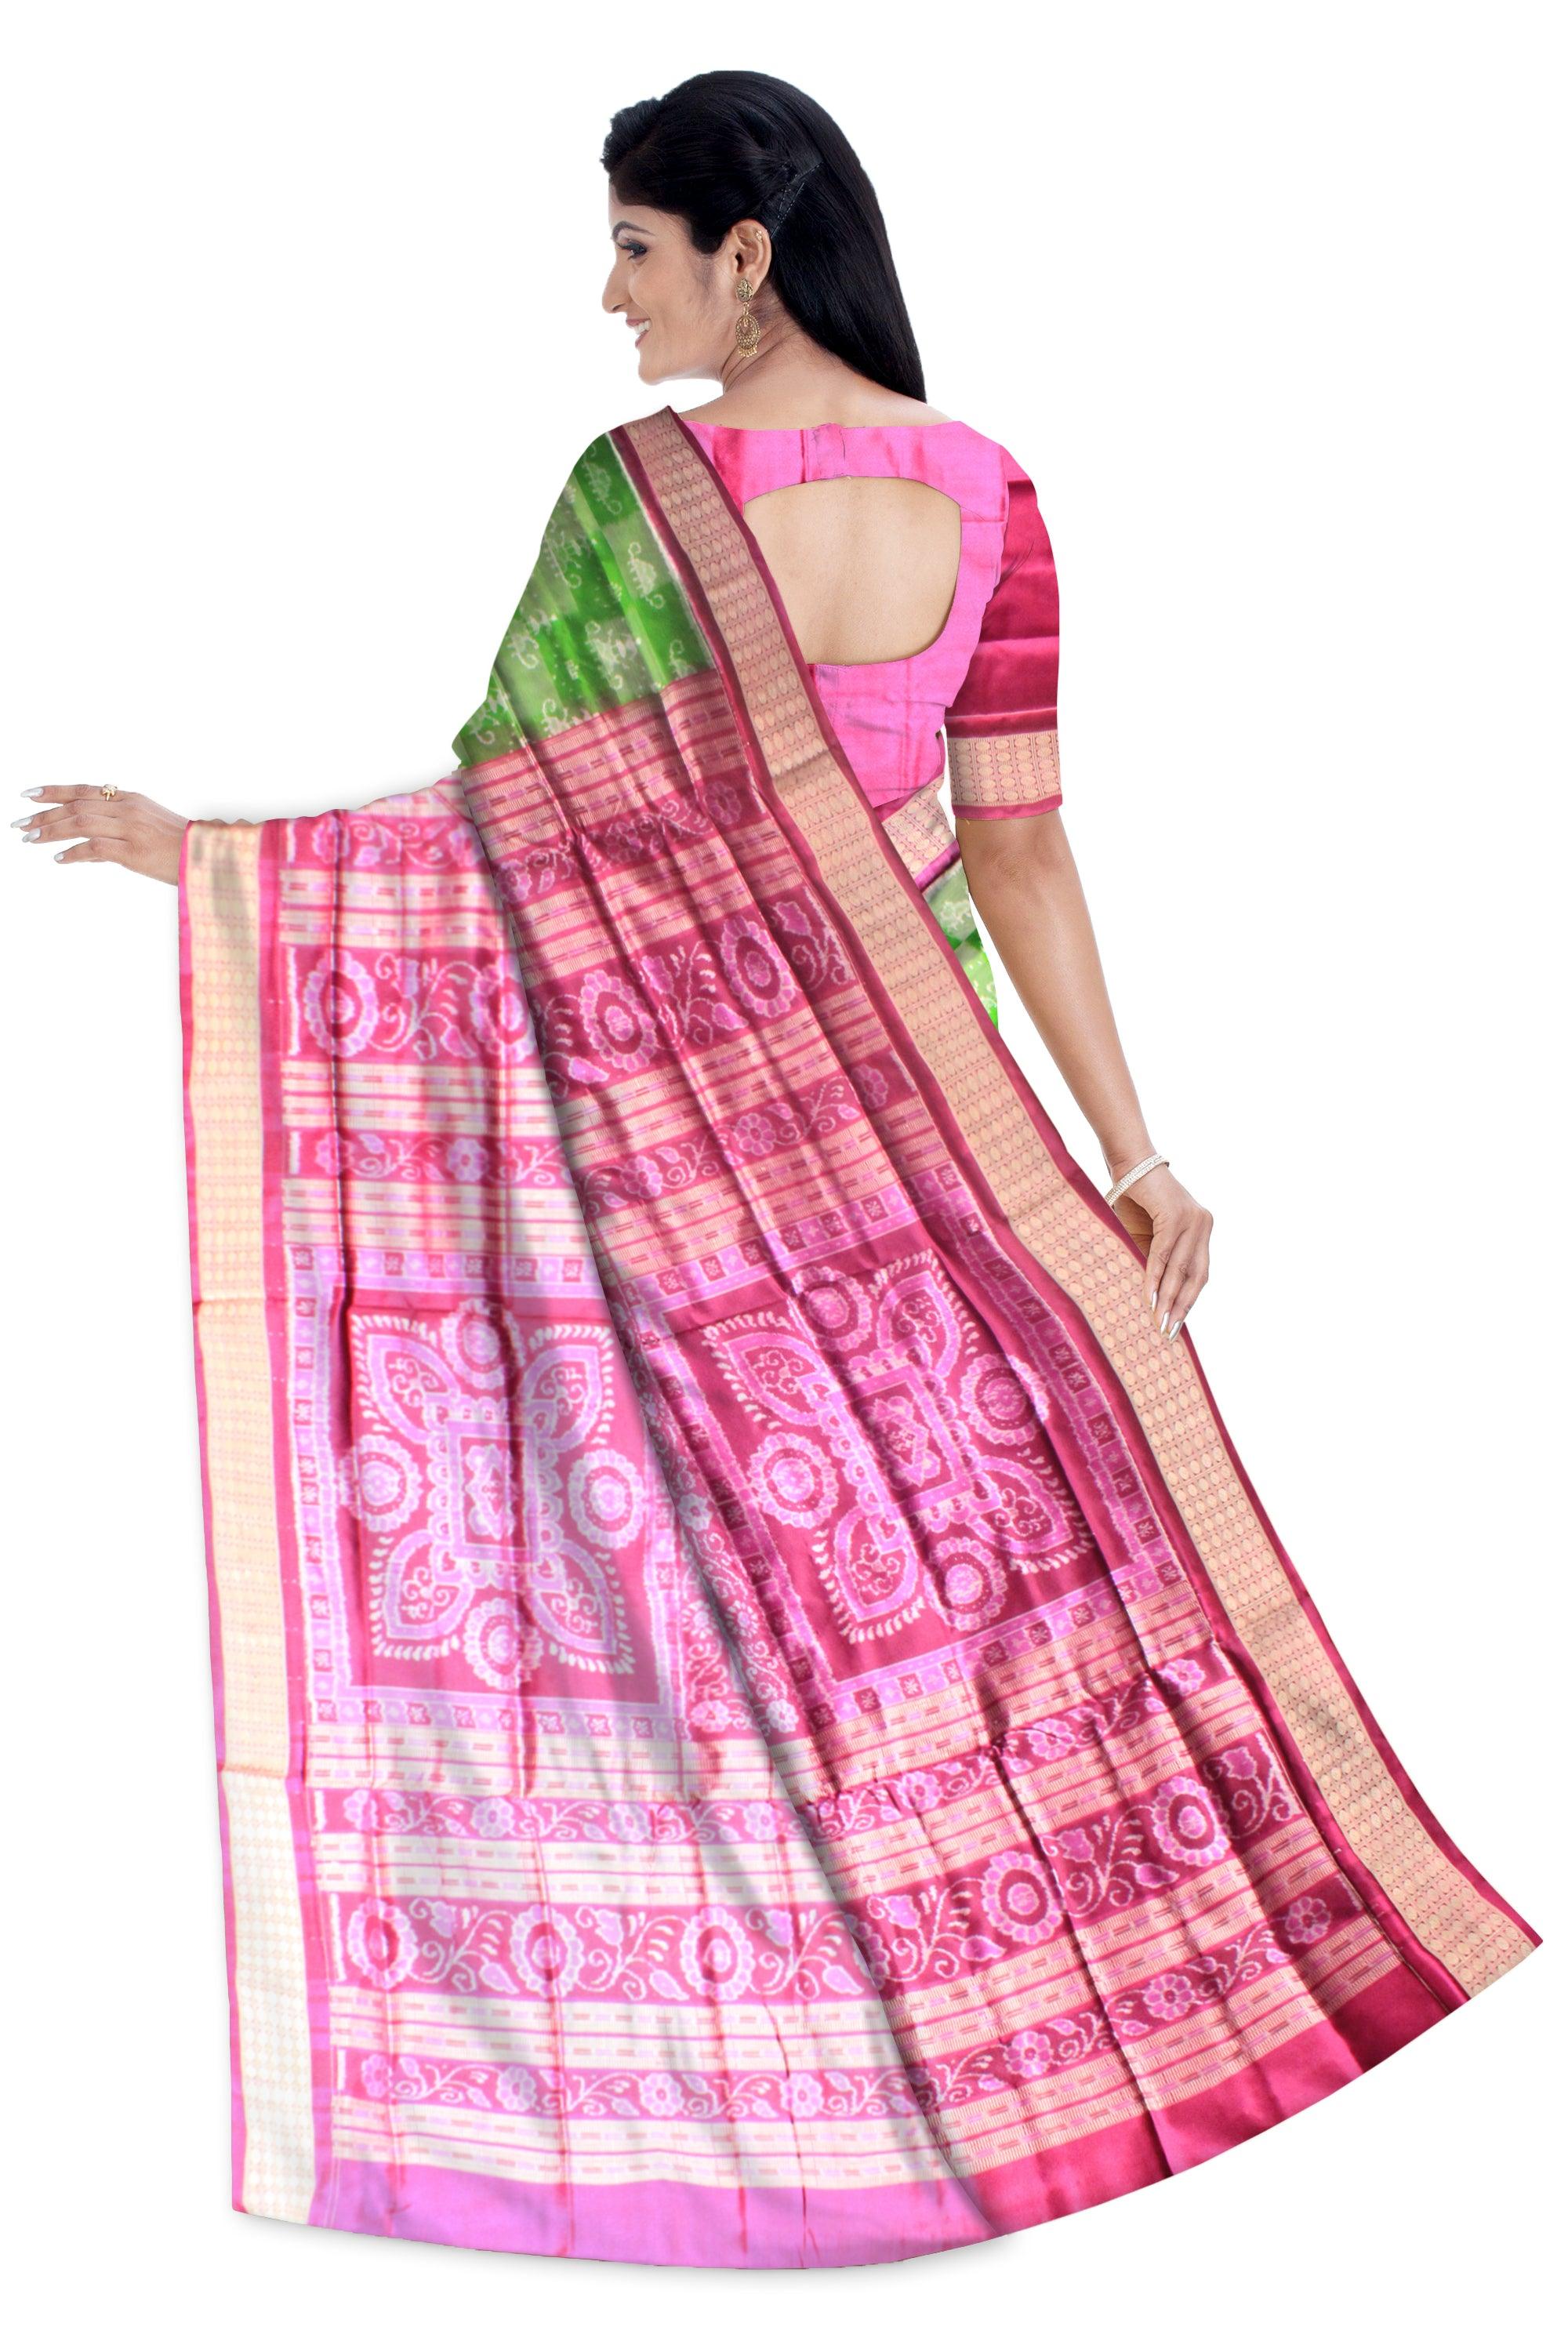 Latest terracotta design sambalpuri pata saree in green and light pink with blouse piece. - Koshali Arts & Crafts Enterprise